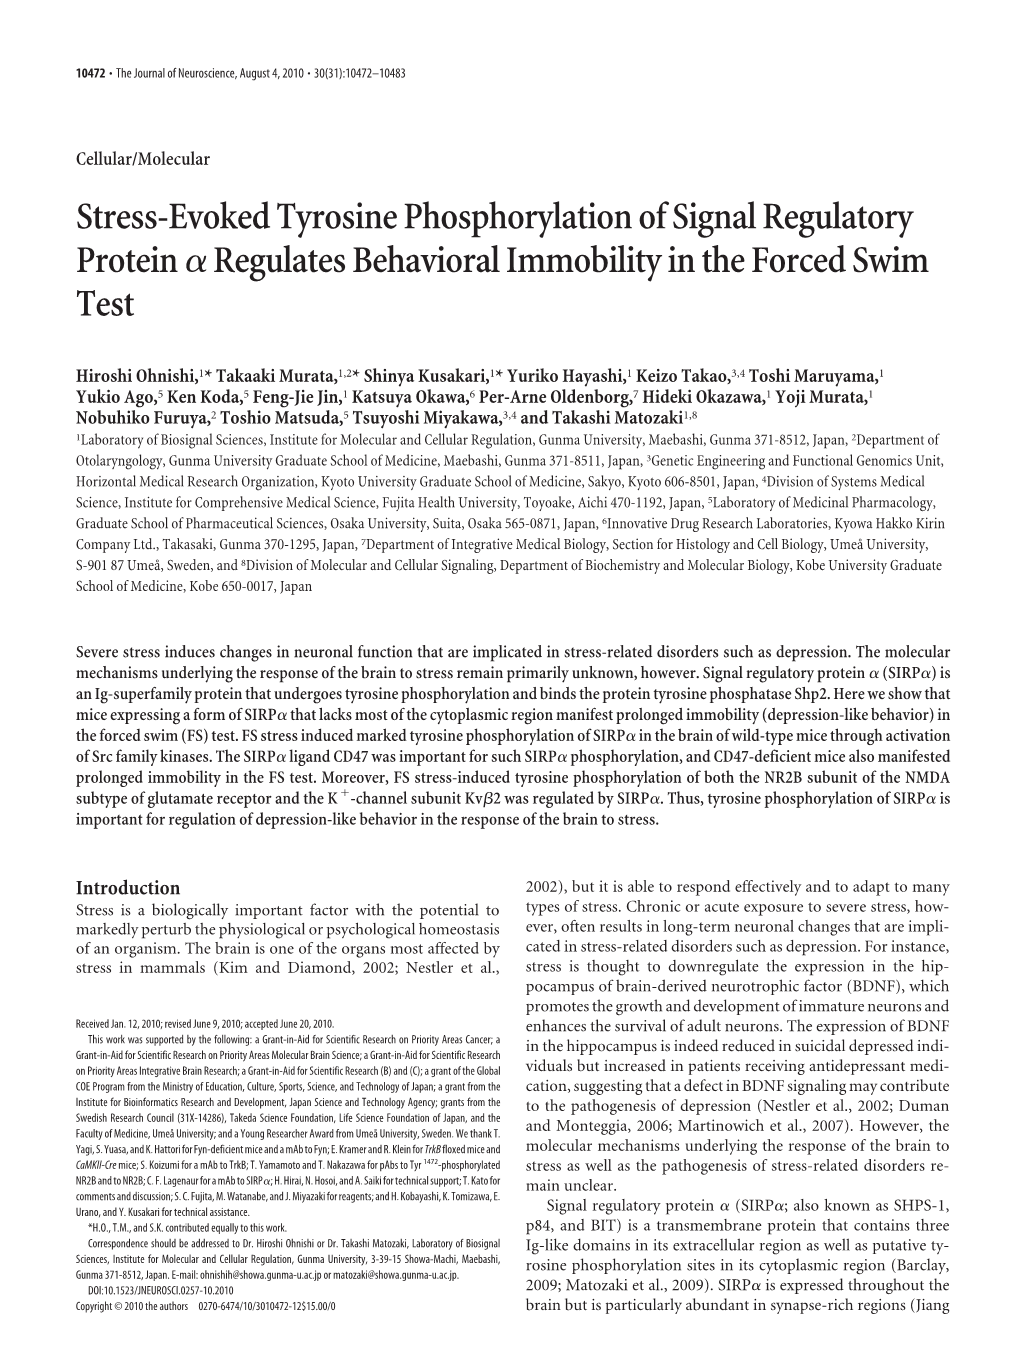 Stress-Evoked Tyrosine Phosphorylation of Signal Regulatory Protein ␣ Regulates Behavioral Immobility in the Forced Swim Test